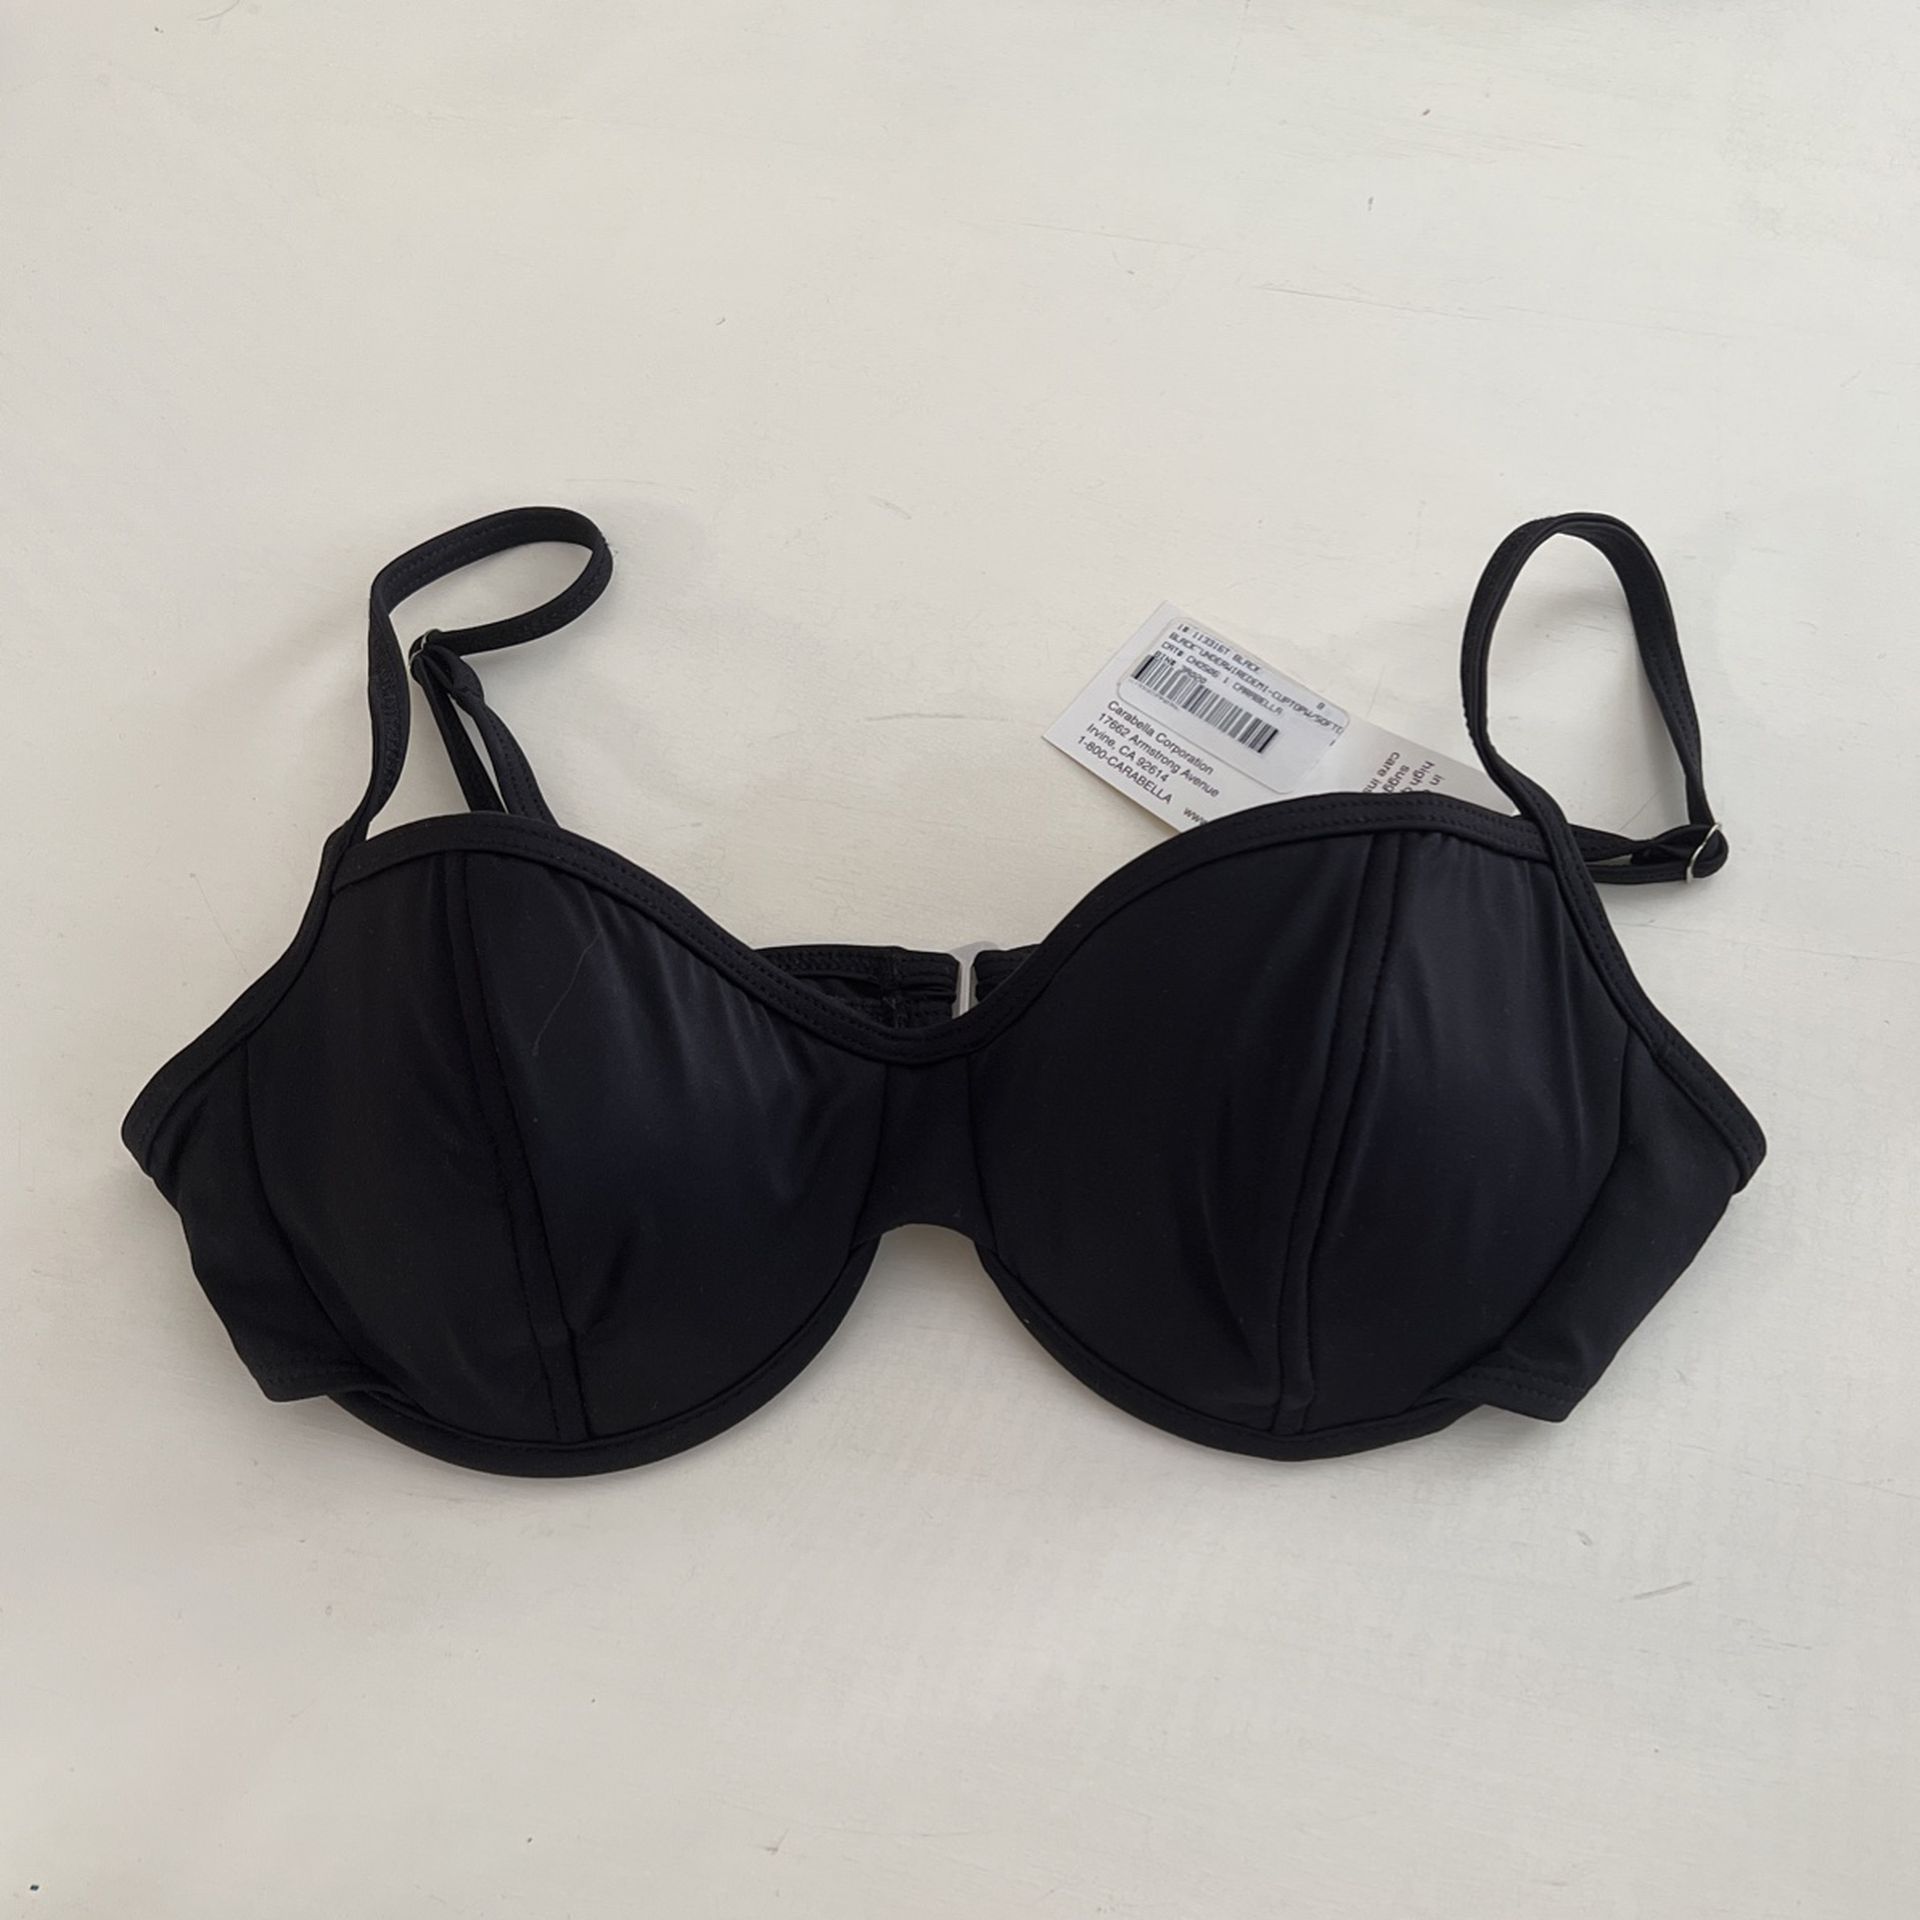 New w/Tag! Women’s Carrabella bikini top size 8 black